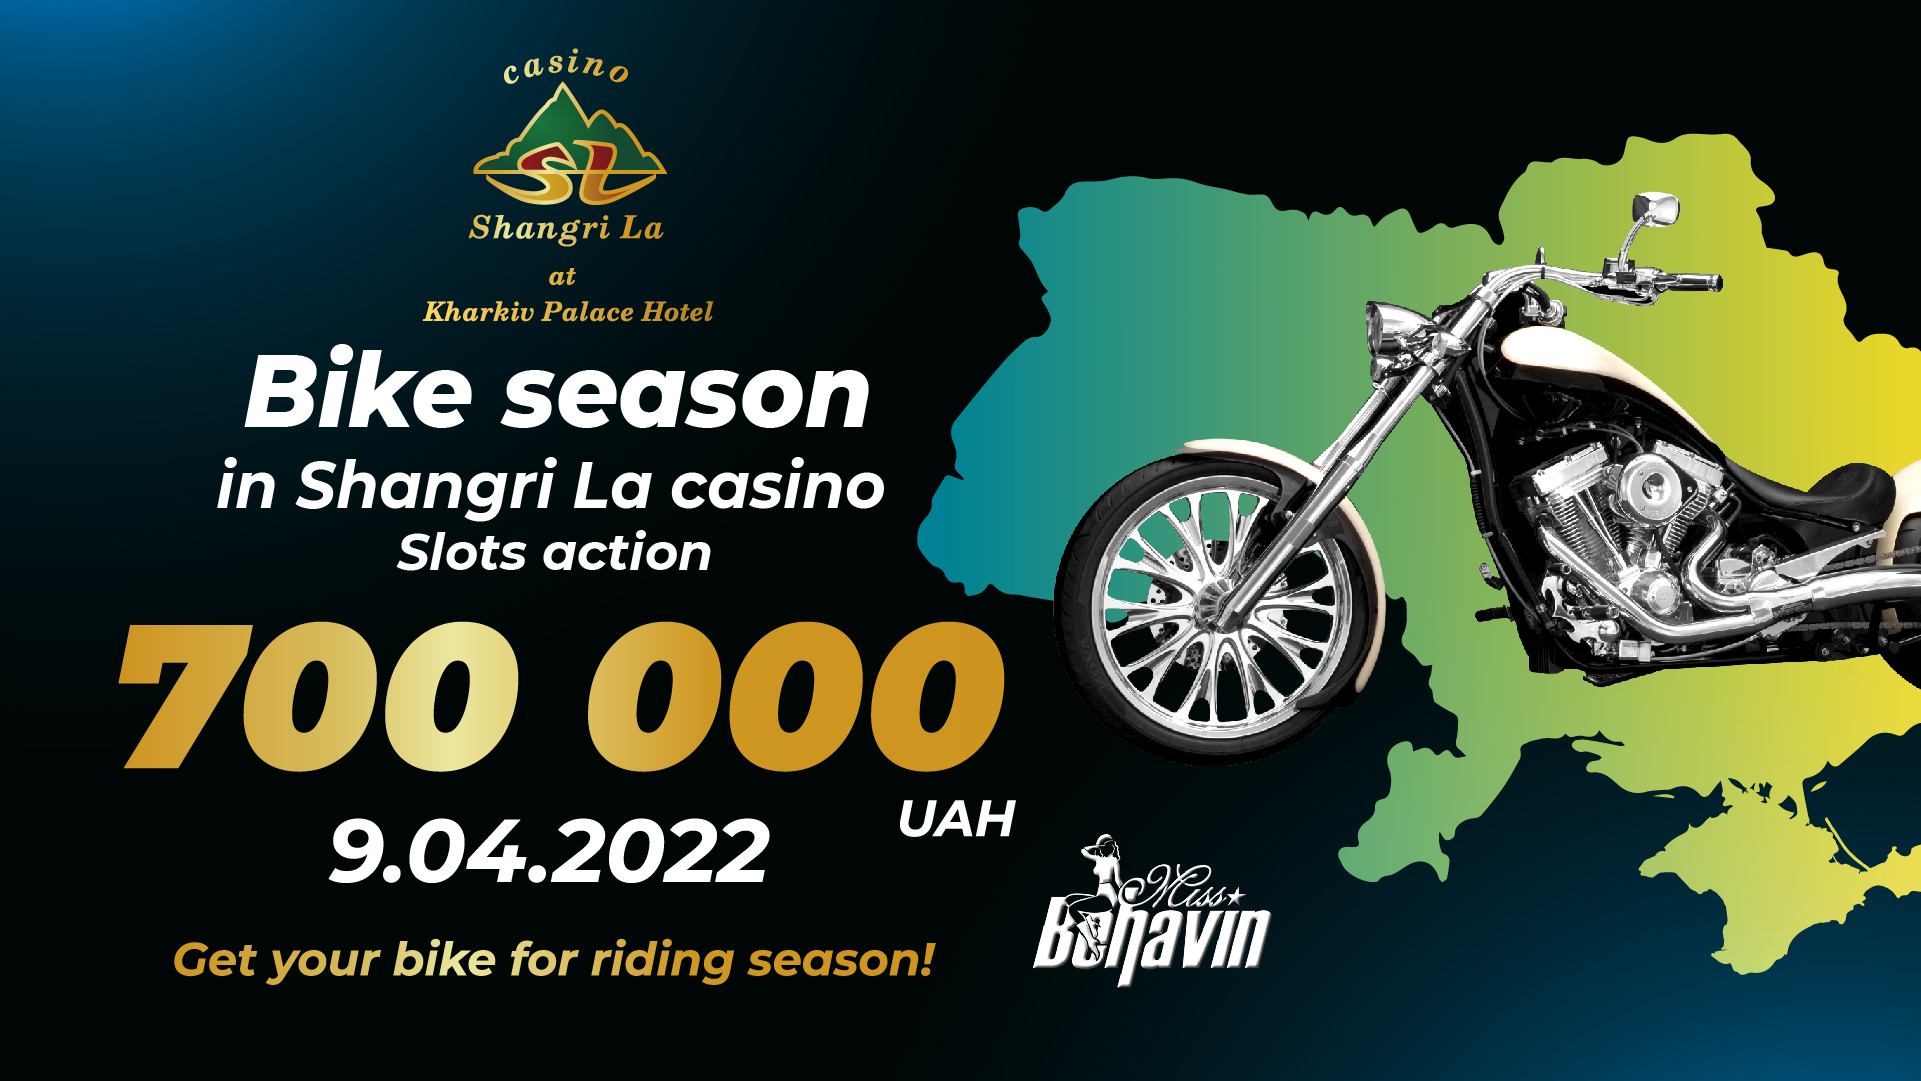 Bike Season at the Shangri La casino!